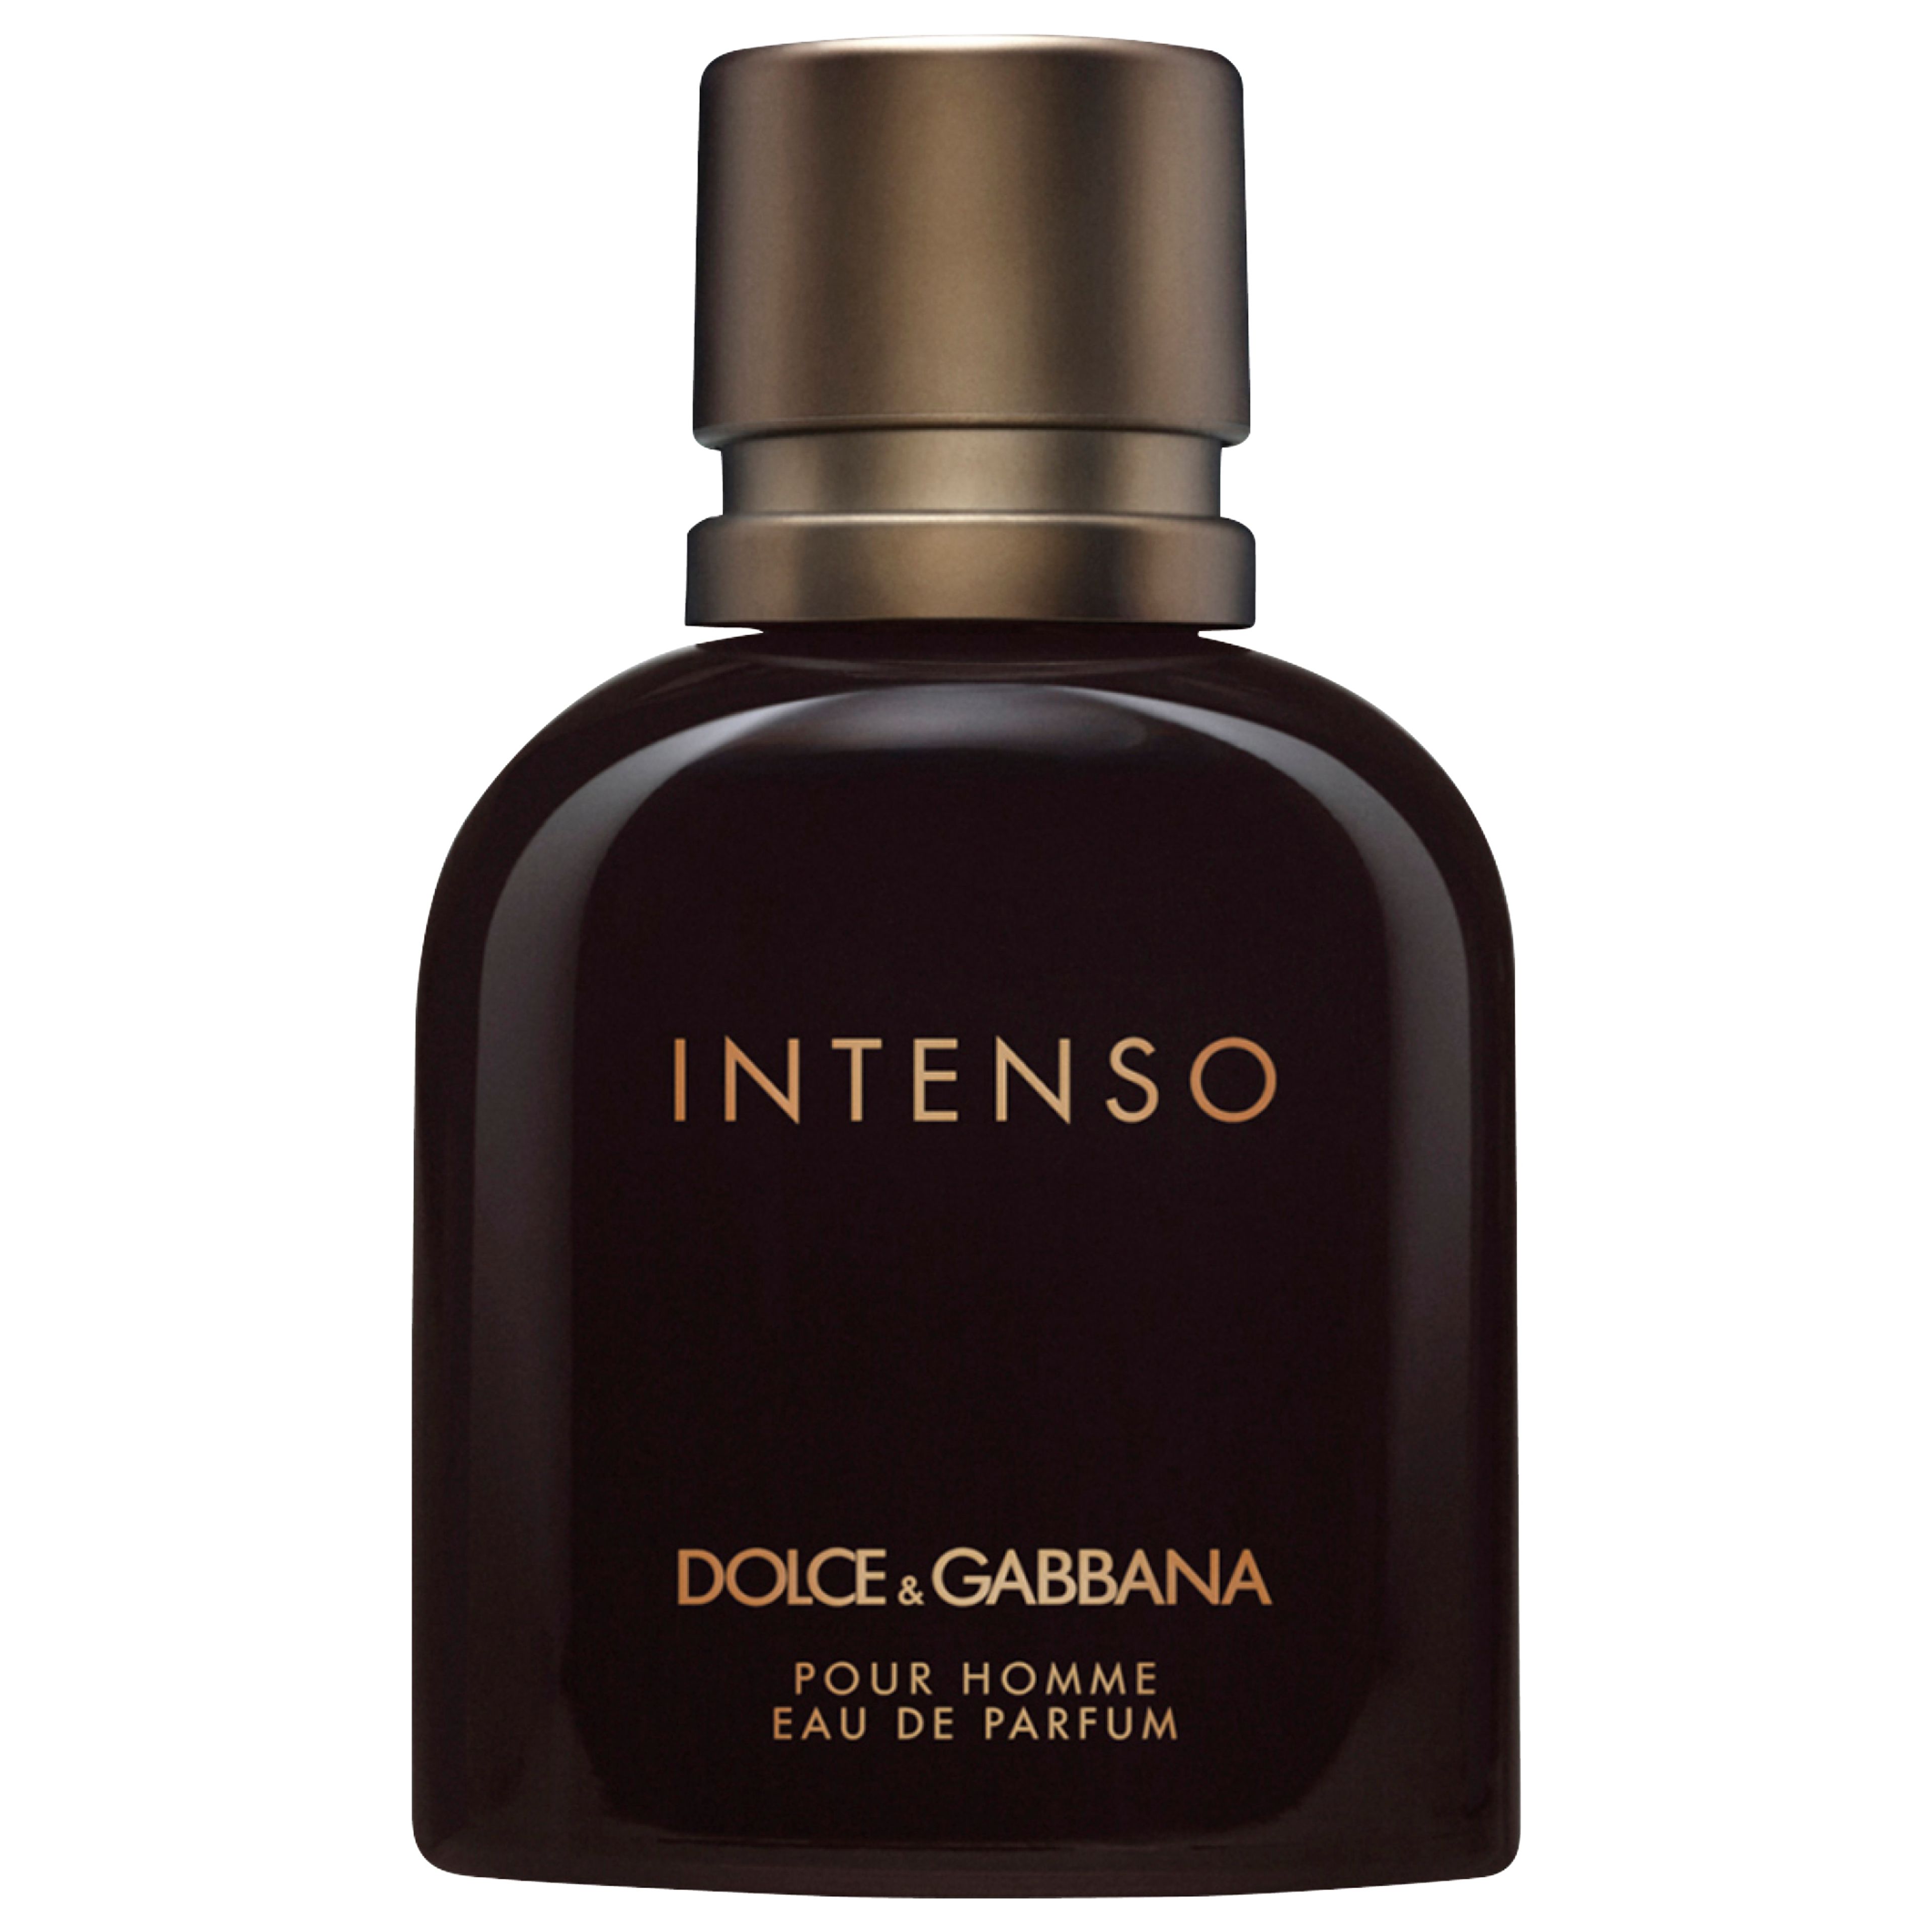 Dolce & Gabbana Intenso Eau De Parfum 1